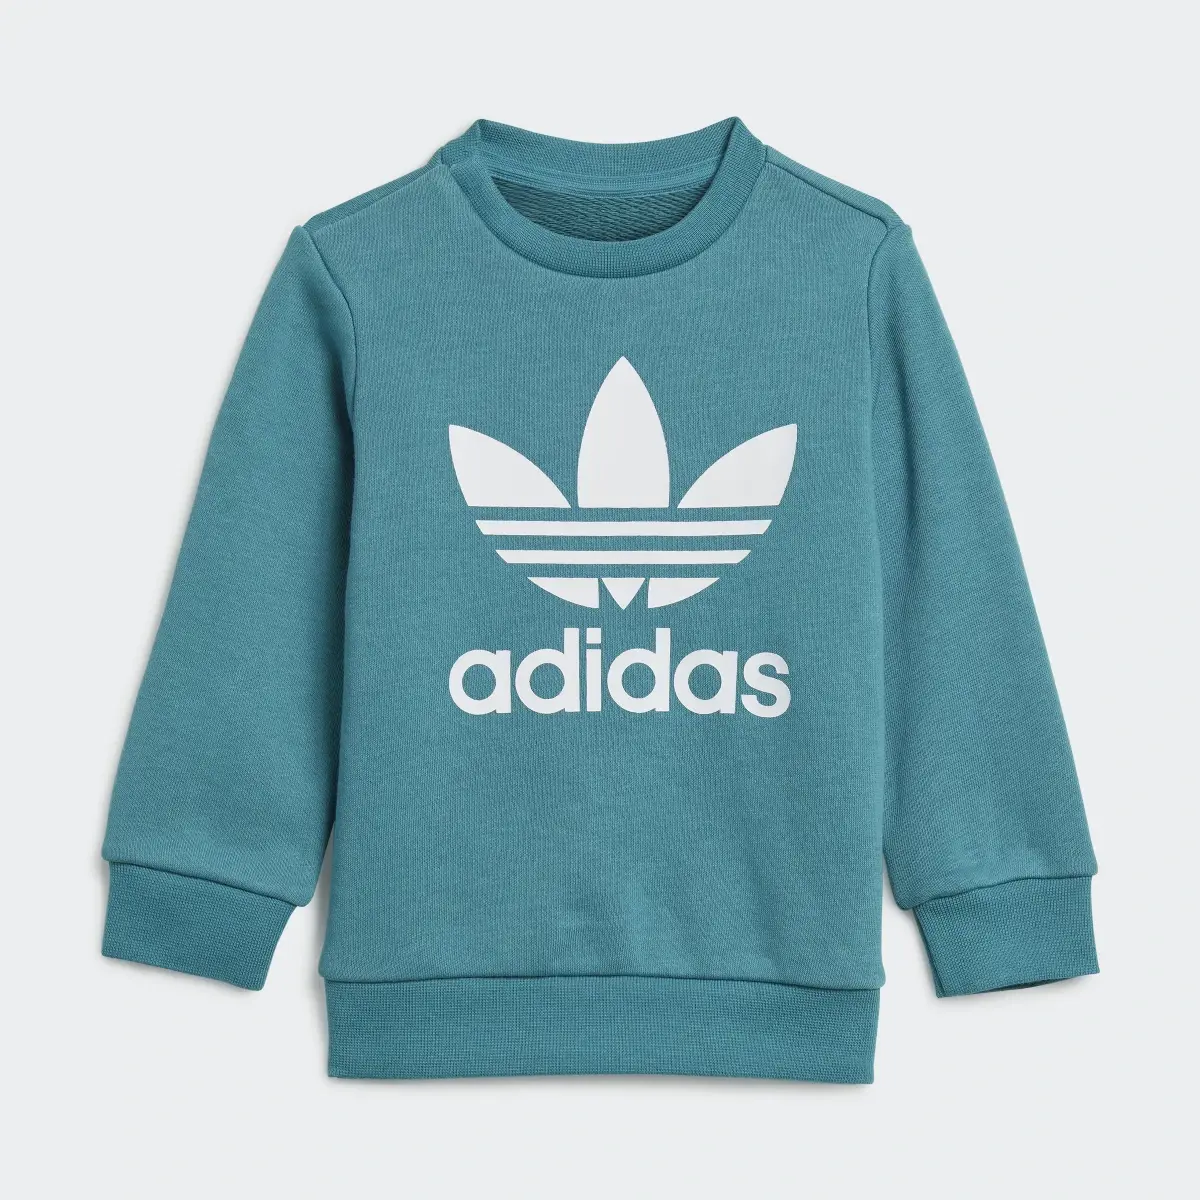 Adidas Crew Sweatshirt Set. 3